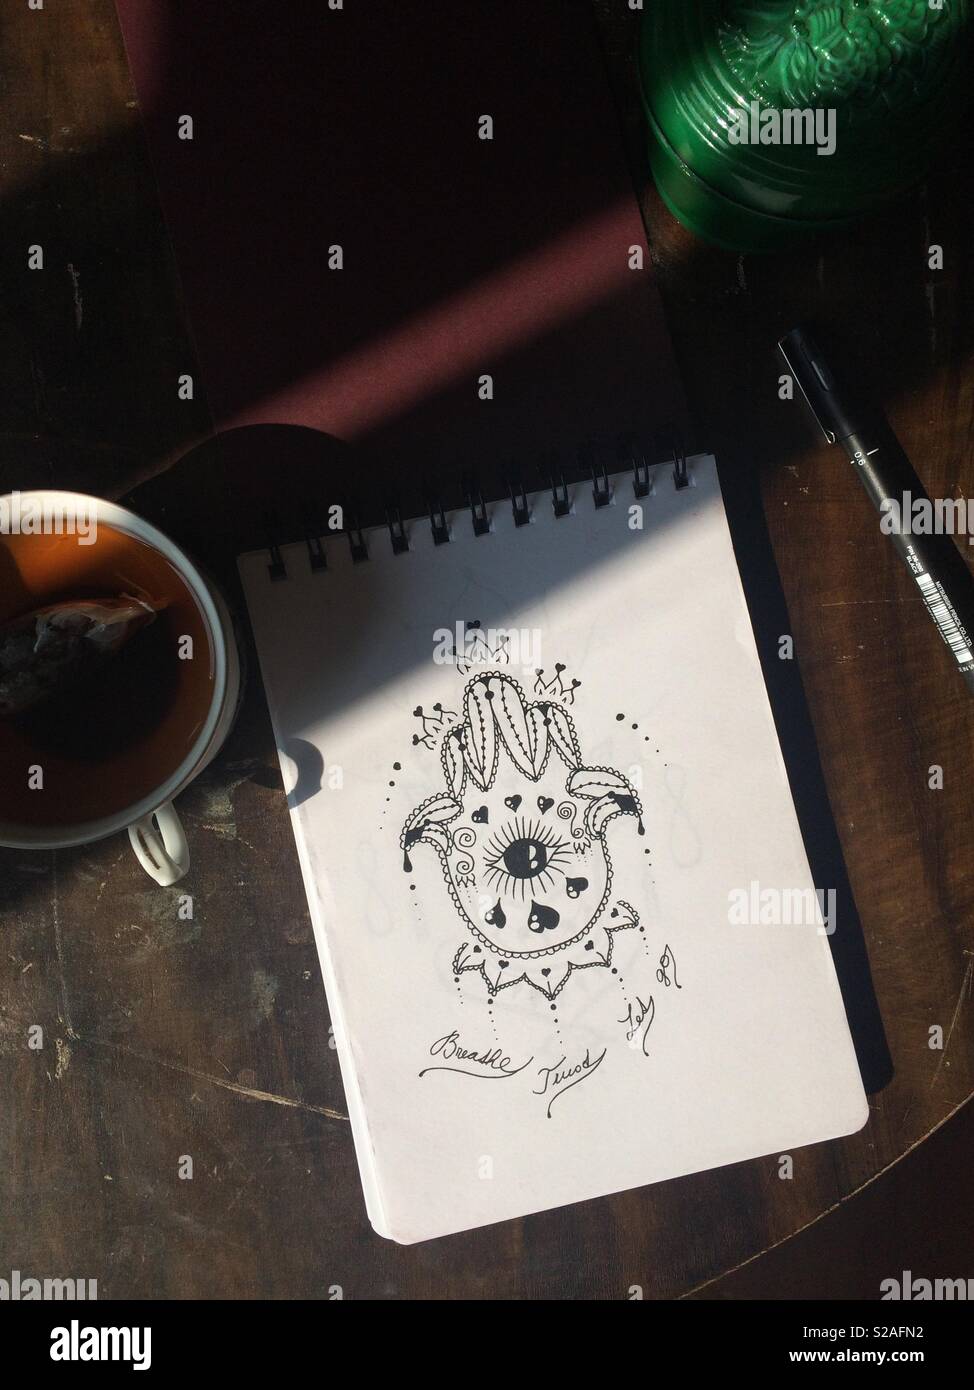 Hamsa hand drawing with morning tea Stock Photo